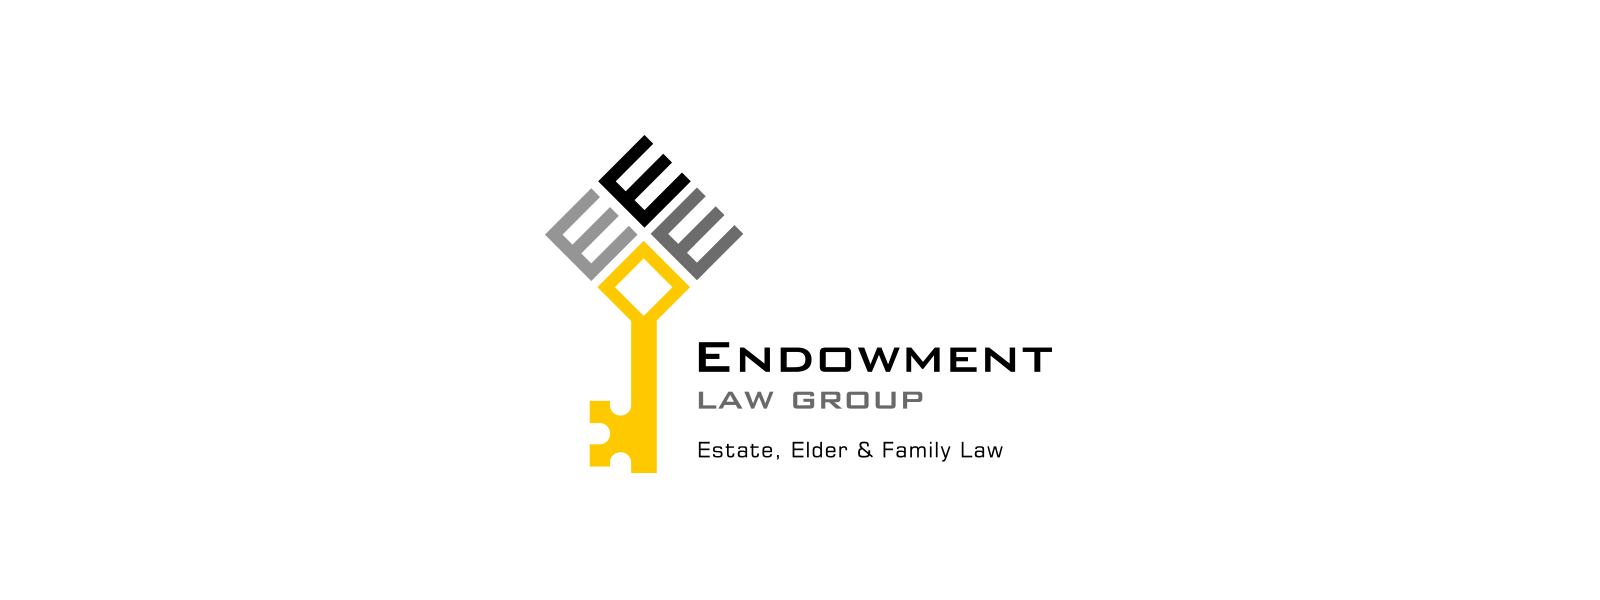 Endowment Law Group logo